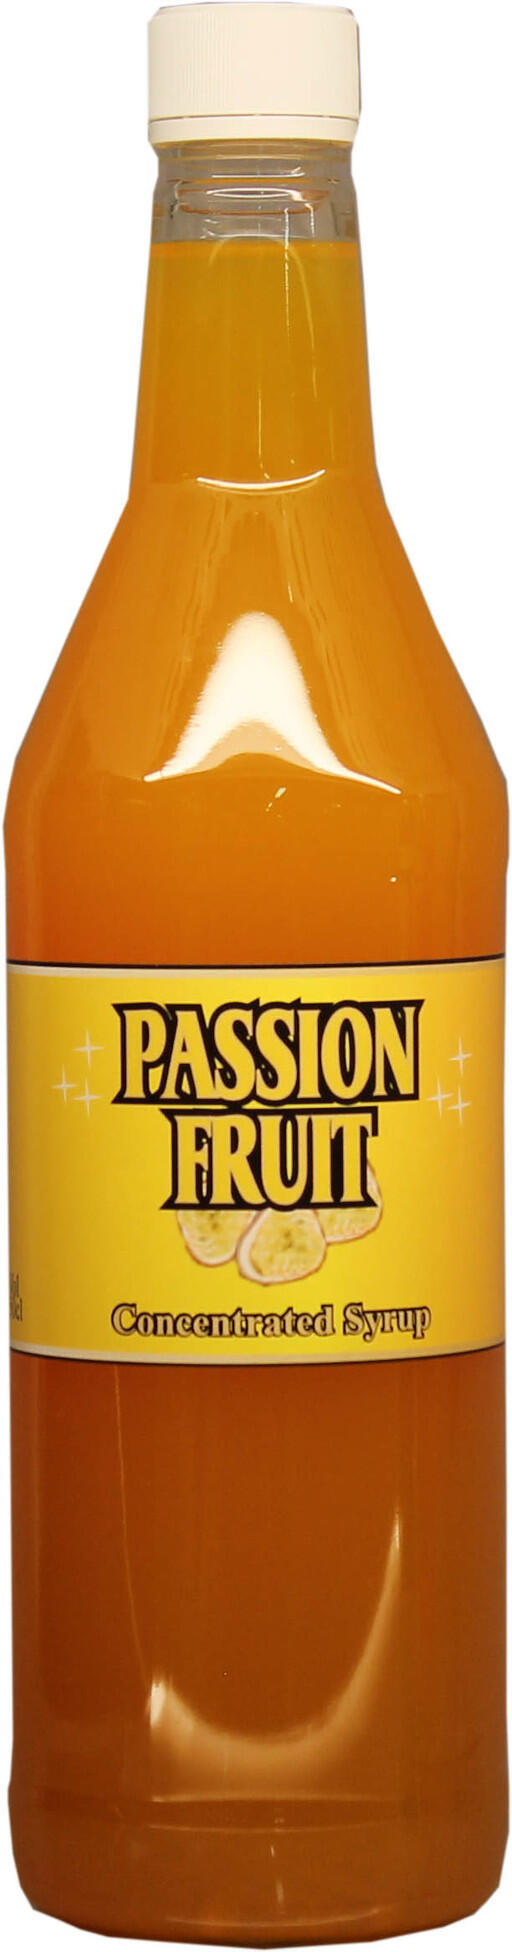 Passion fruit syrup (Passionfruktssyrup).